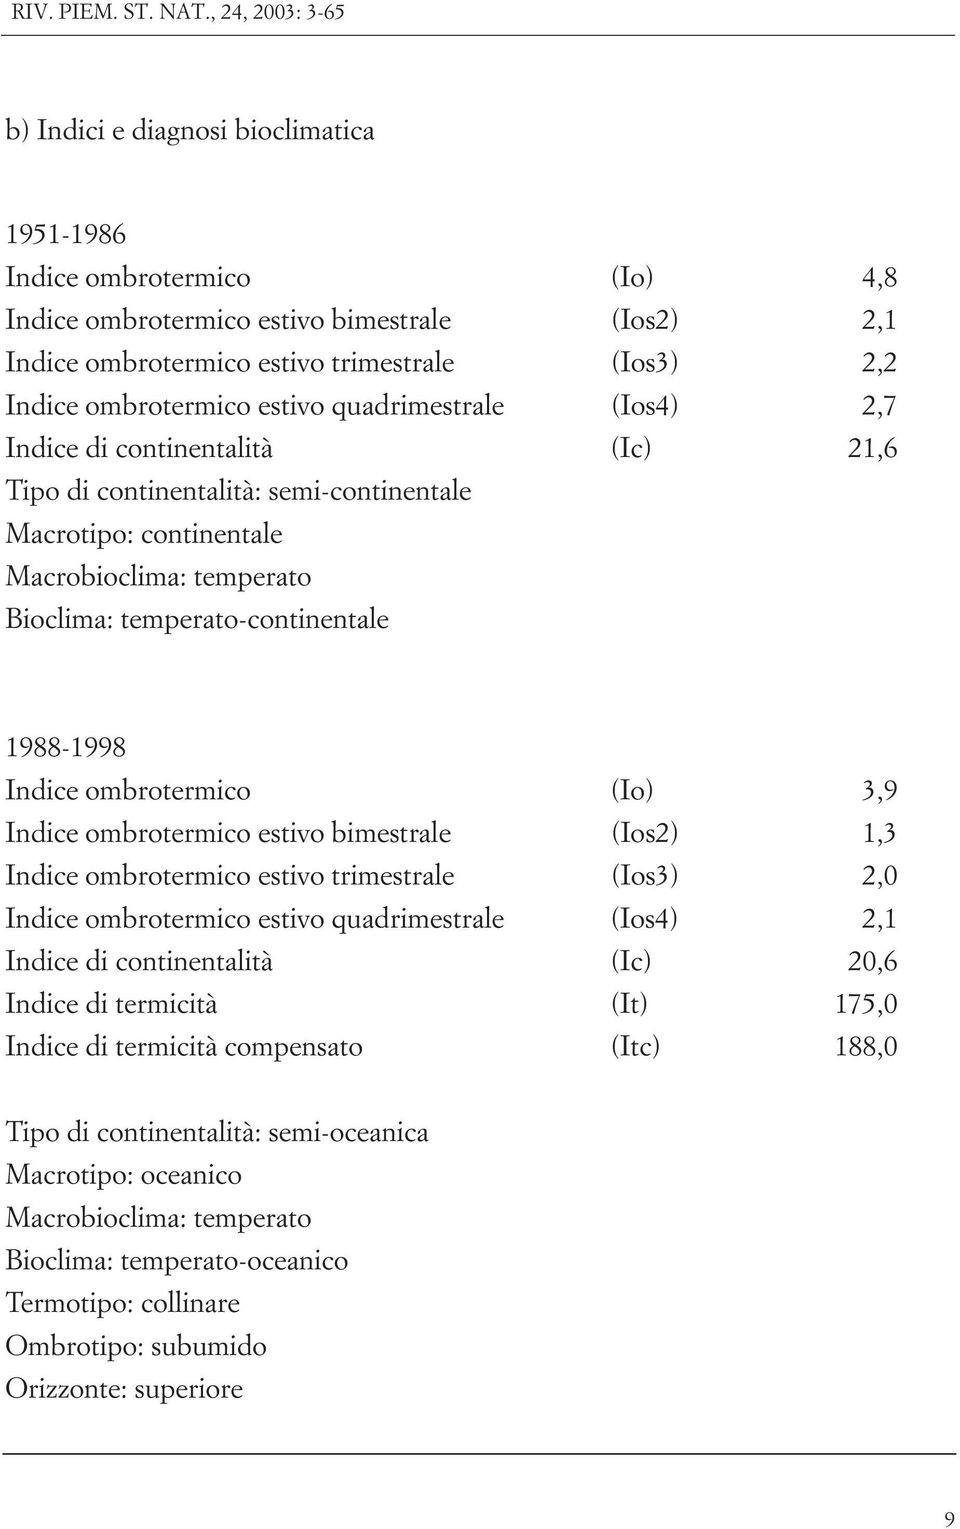 Indice ombrotermico (Io) 3,9 Indice ombrotermico estivo bimestrale (Ios2) 1,3 Indice ombrotermico estivo trimestrale (Ios3) 2,0 Indice ombrotermico estivo quadrimestrale (Ios4) 2,1 Indice di